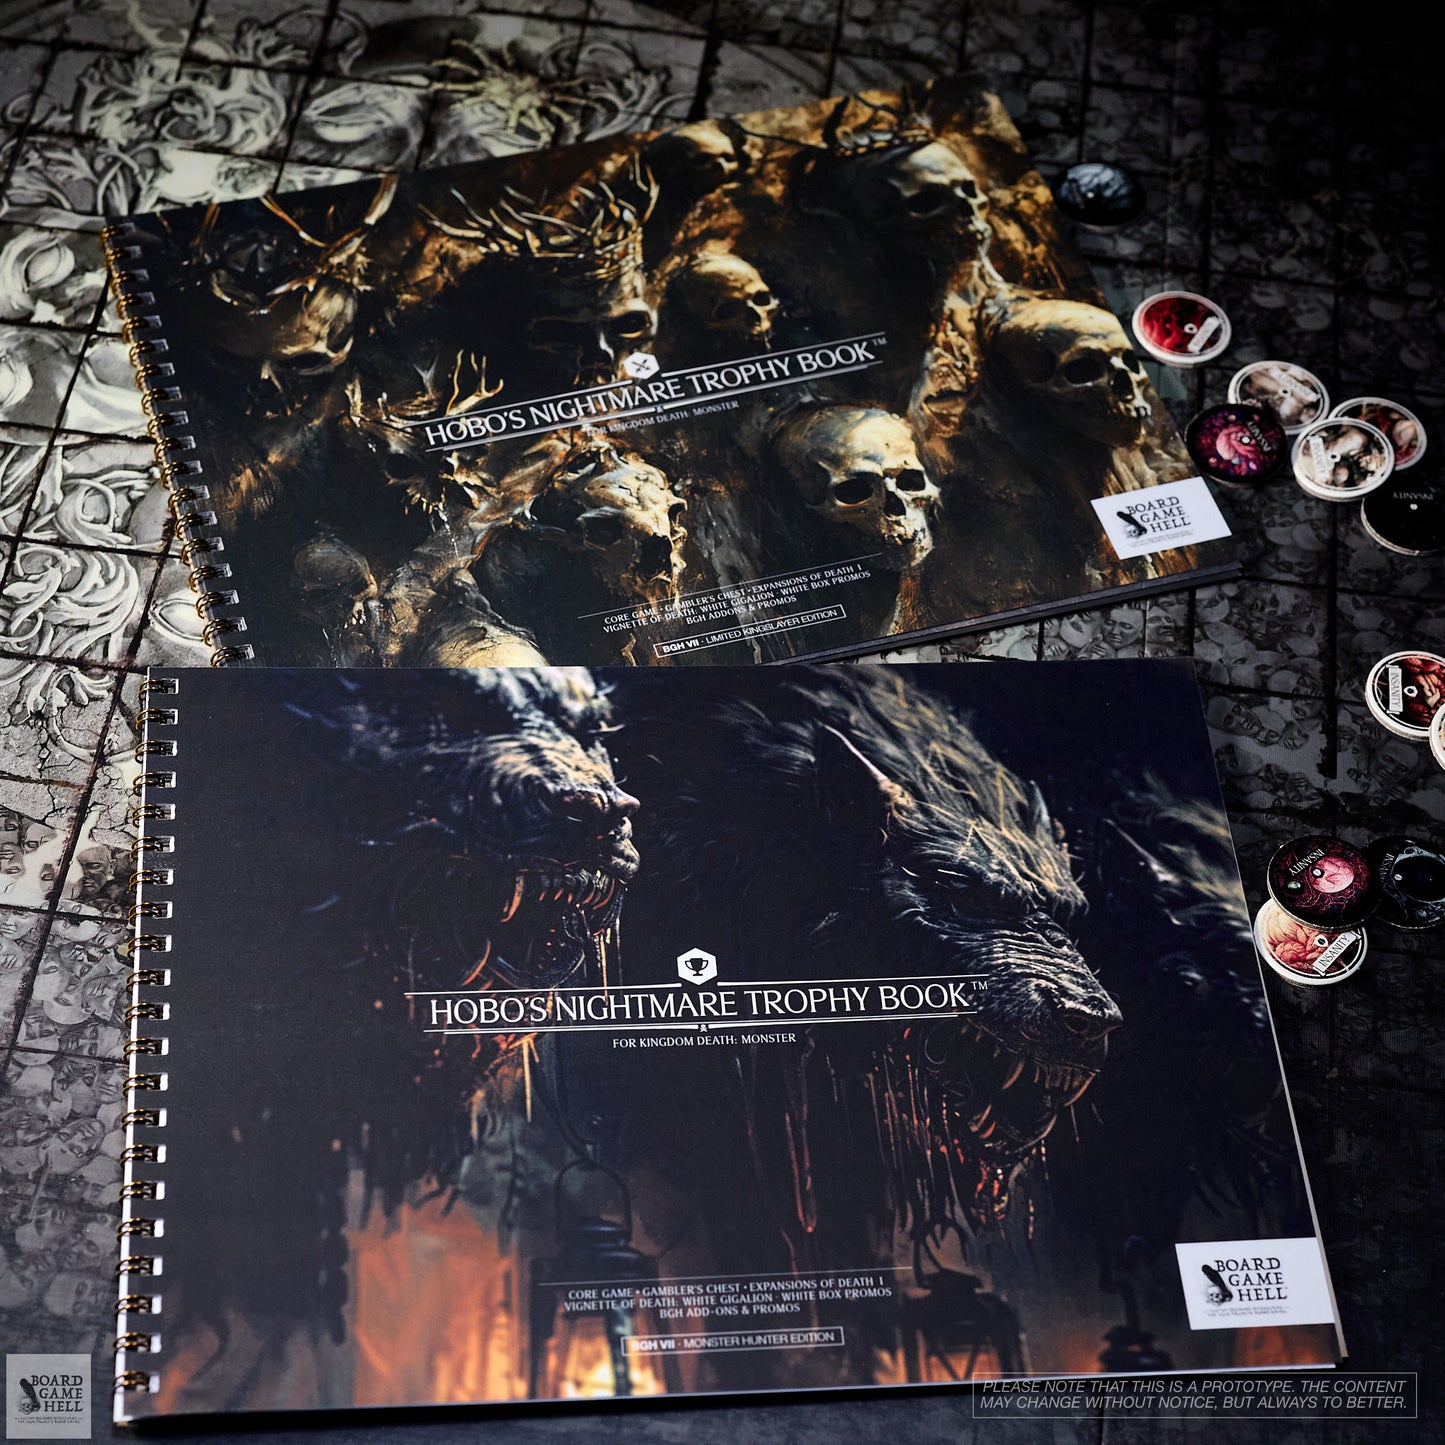 Hobo's Nightmare Trophy Book™ for Kingdom Death: Monster (PRE-ORDER)